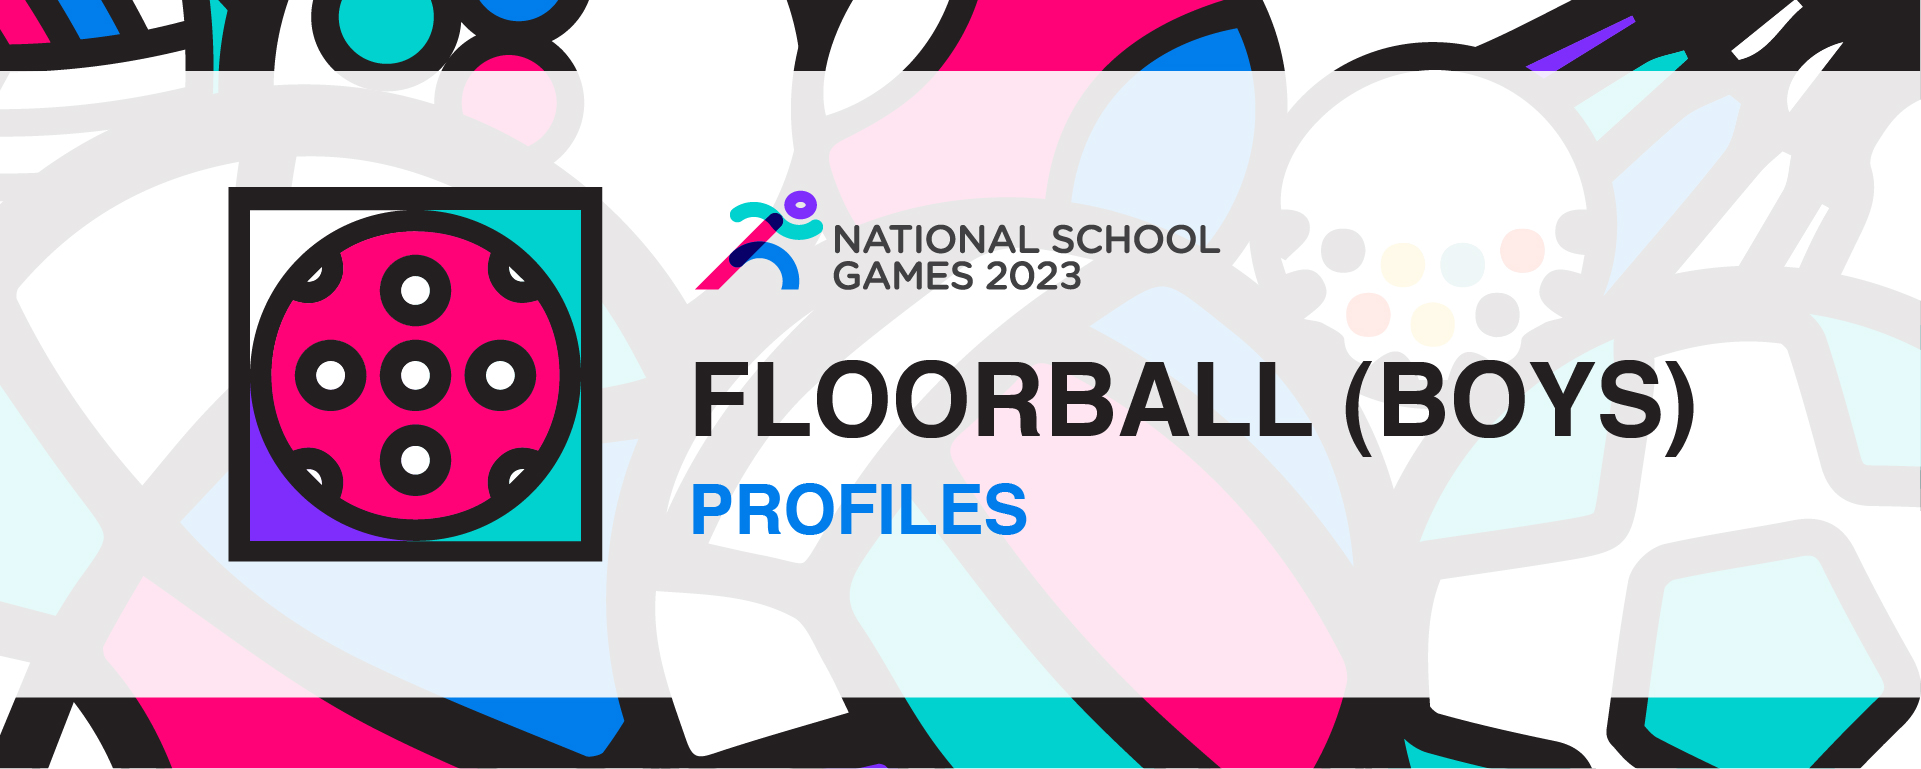 National School Games 2023 | Floorball | Profile